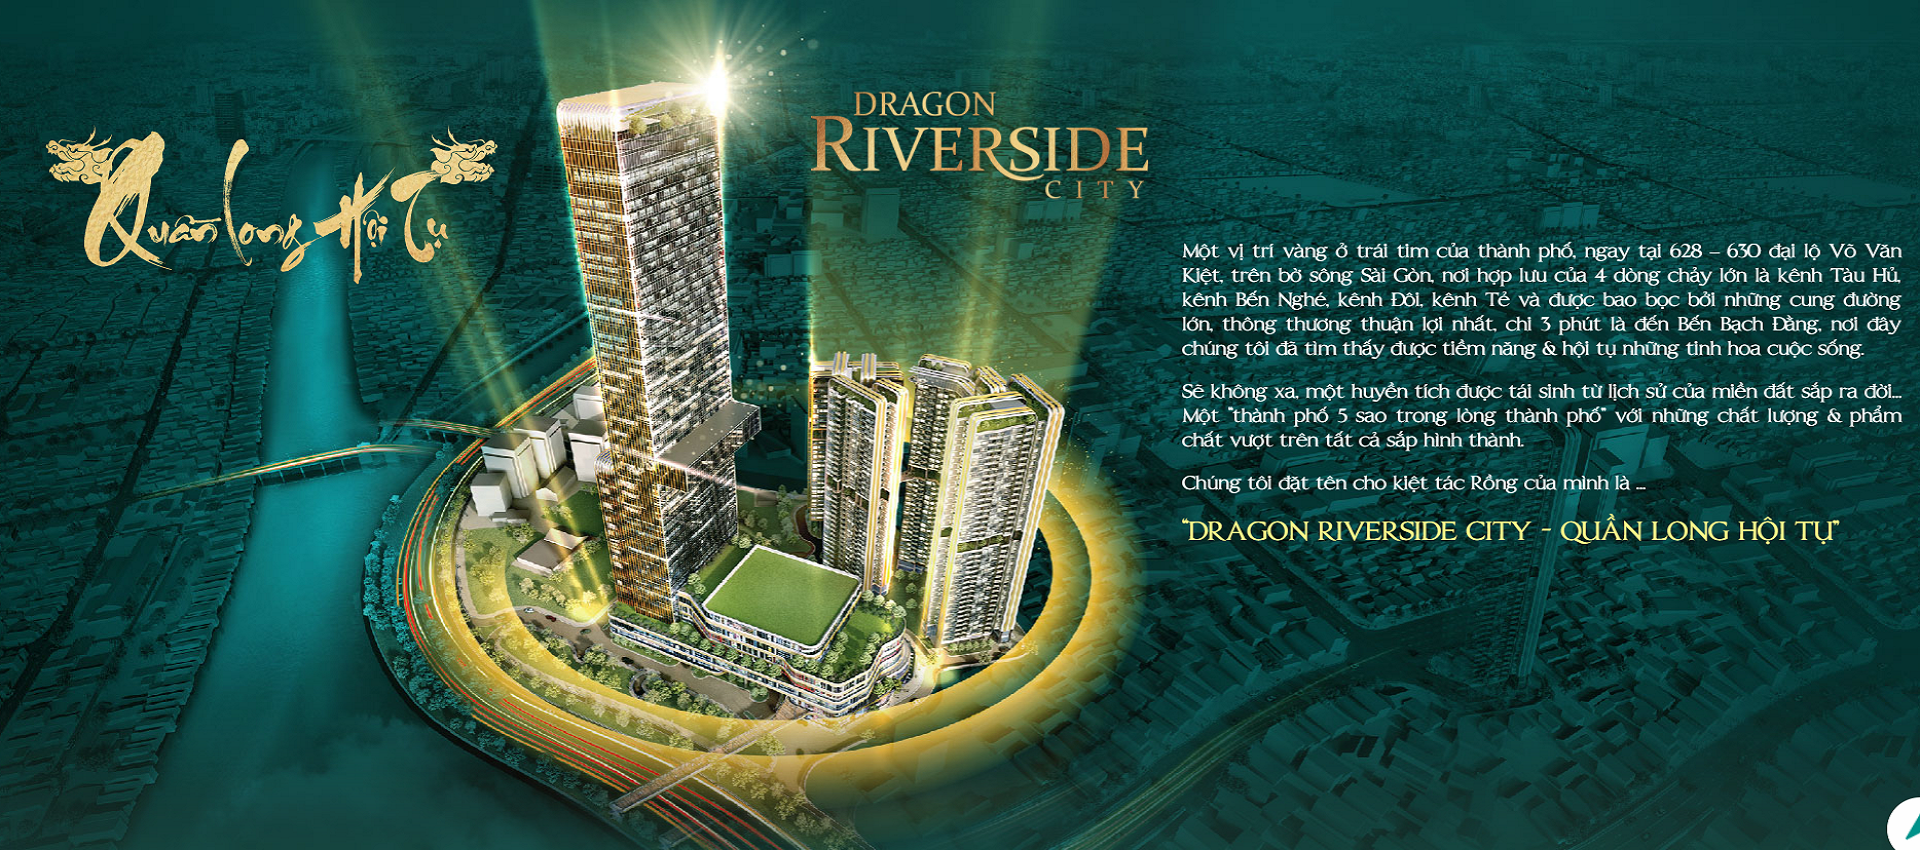 Căn hộ Dragon Riverside City